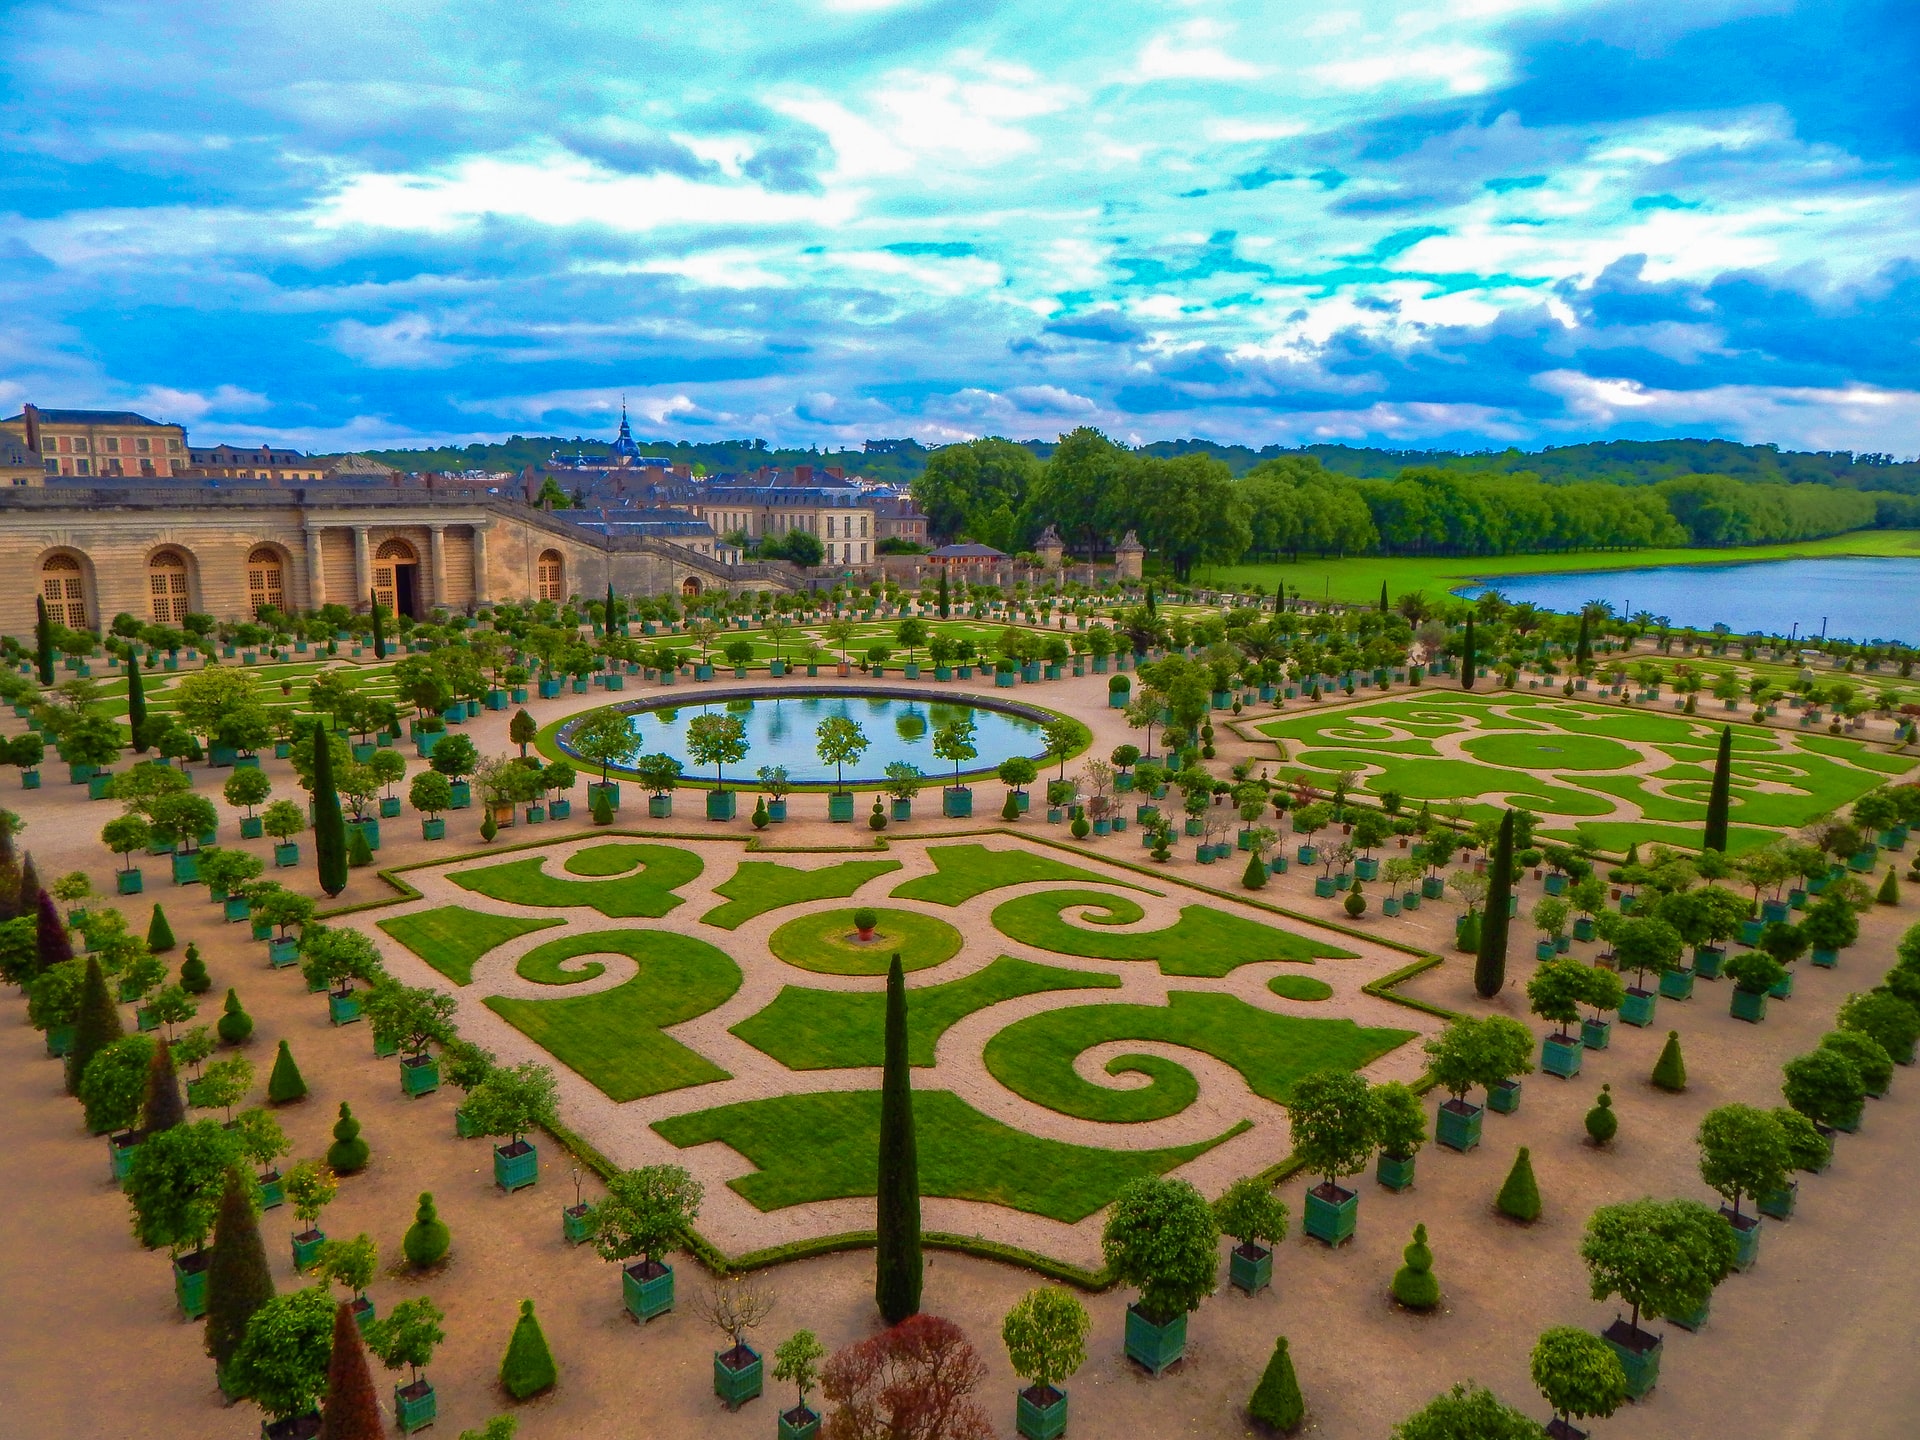 Palace of Versailles by Clark Van Der Beken on Unsplash